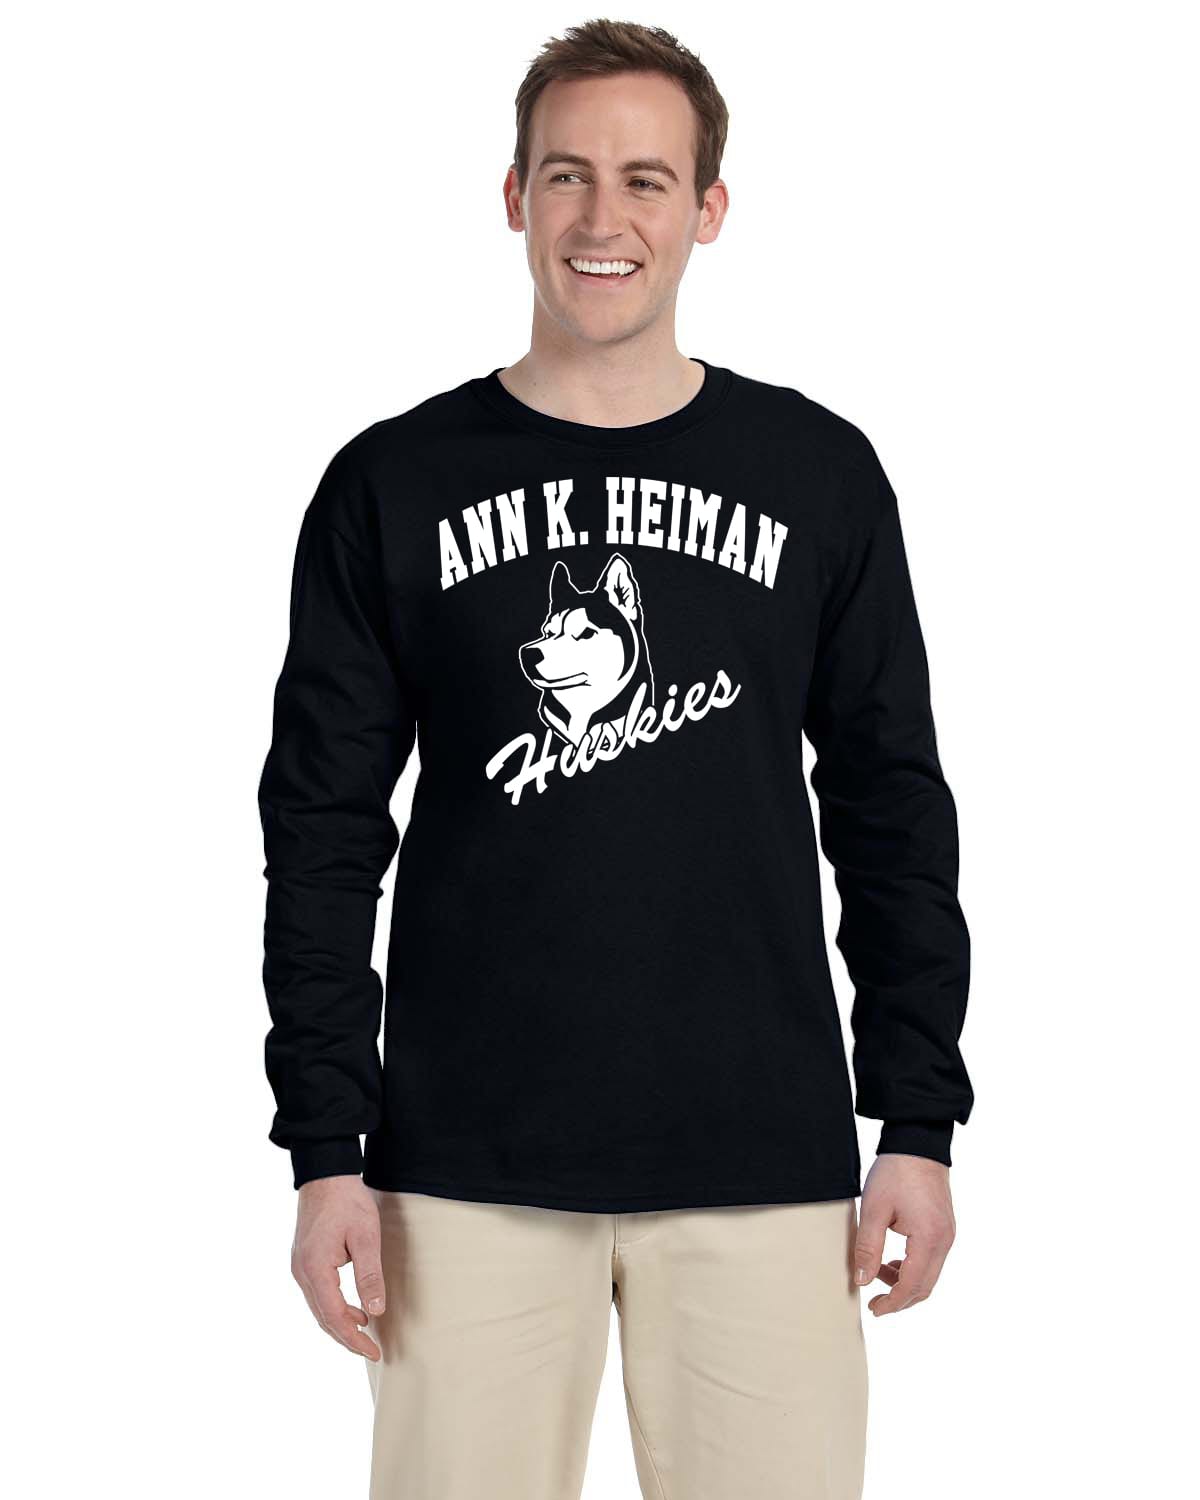 Heiman Elementary School Adult Black Long Sleeve Cotton T-shirt